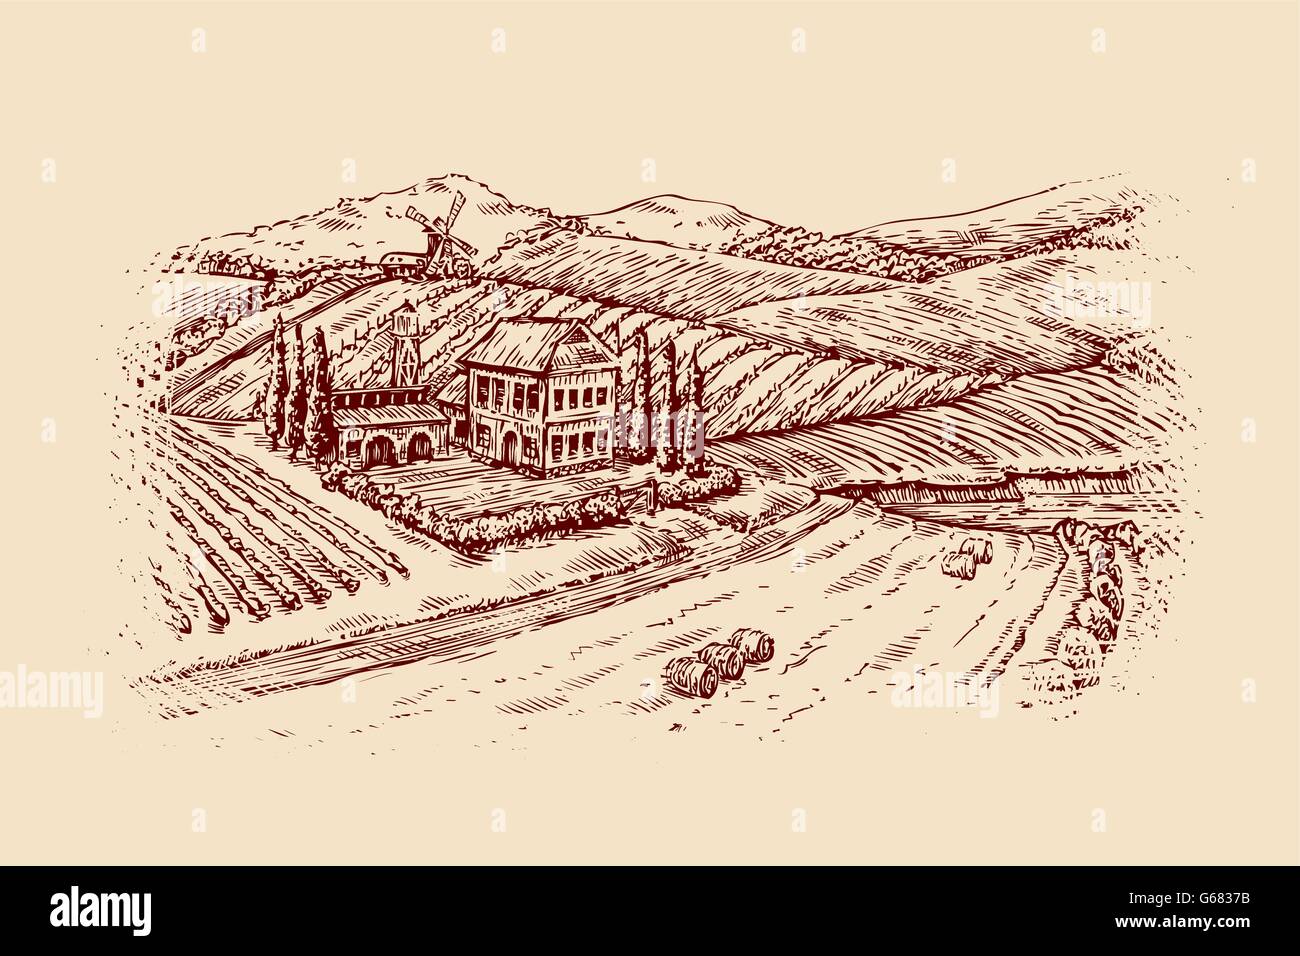 Italien. Italienische Landschaft. Handskizze Vintage Weinberg, Bauernhof. Vektor-illustration Stock Vektor